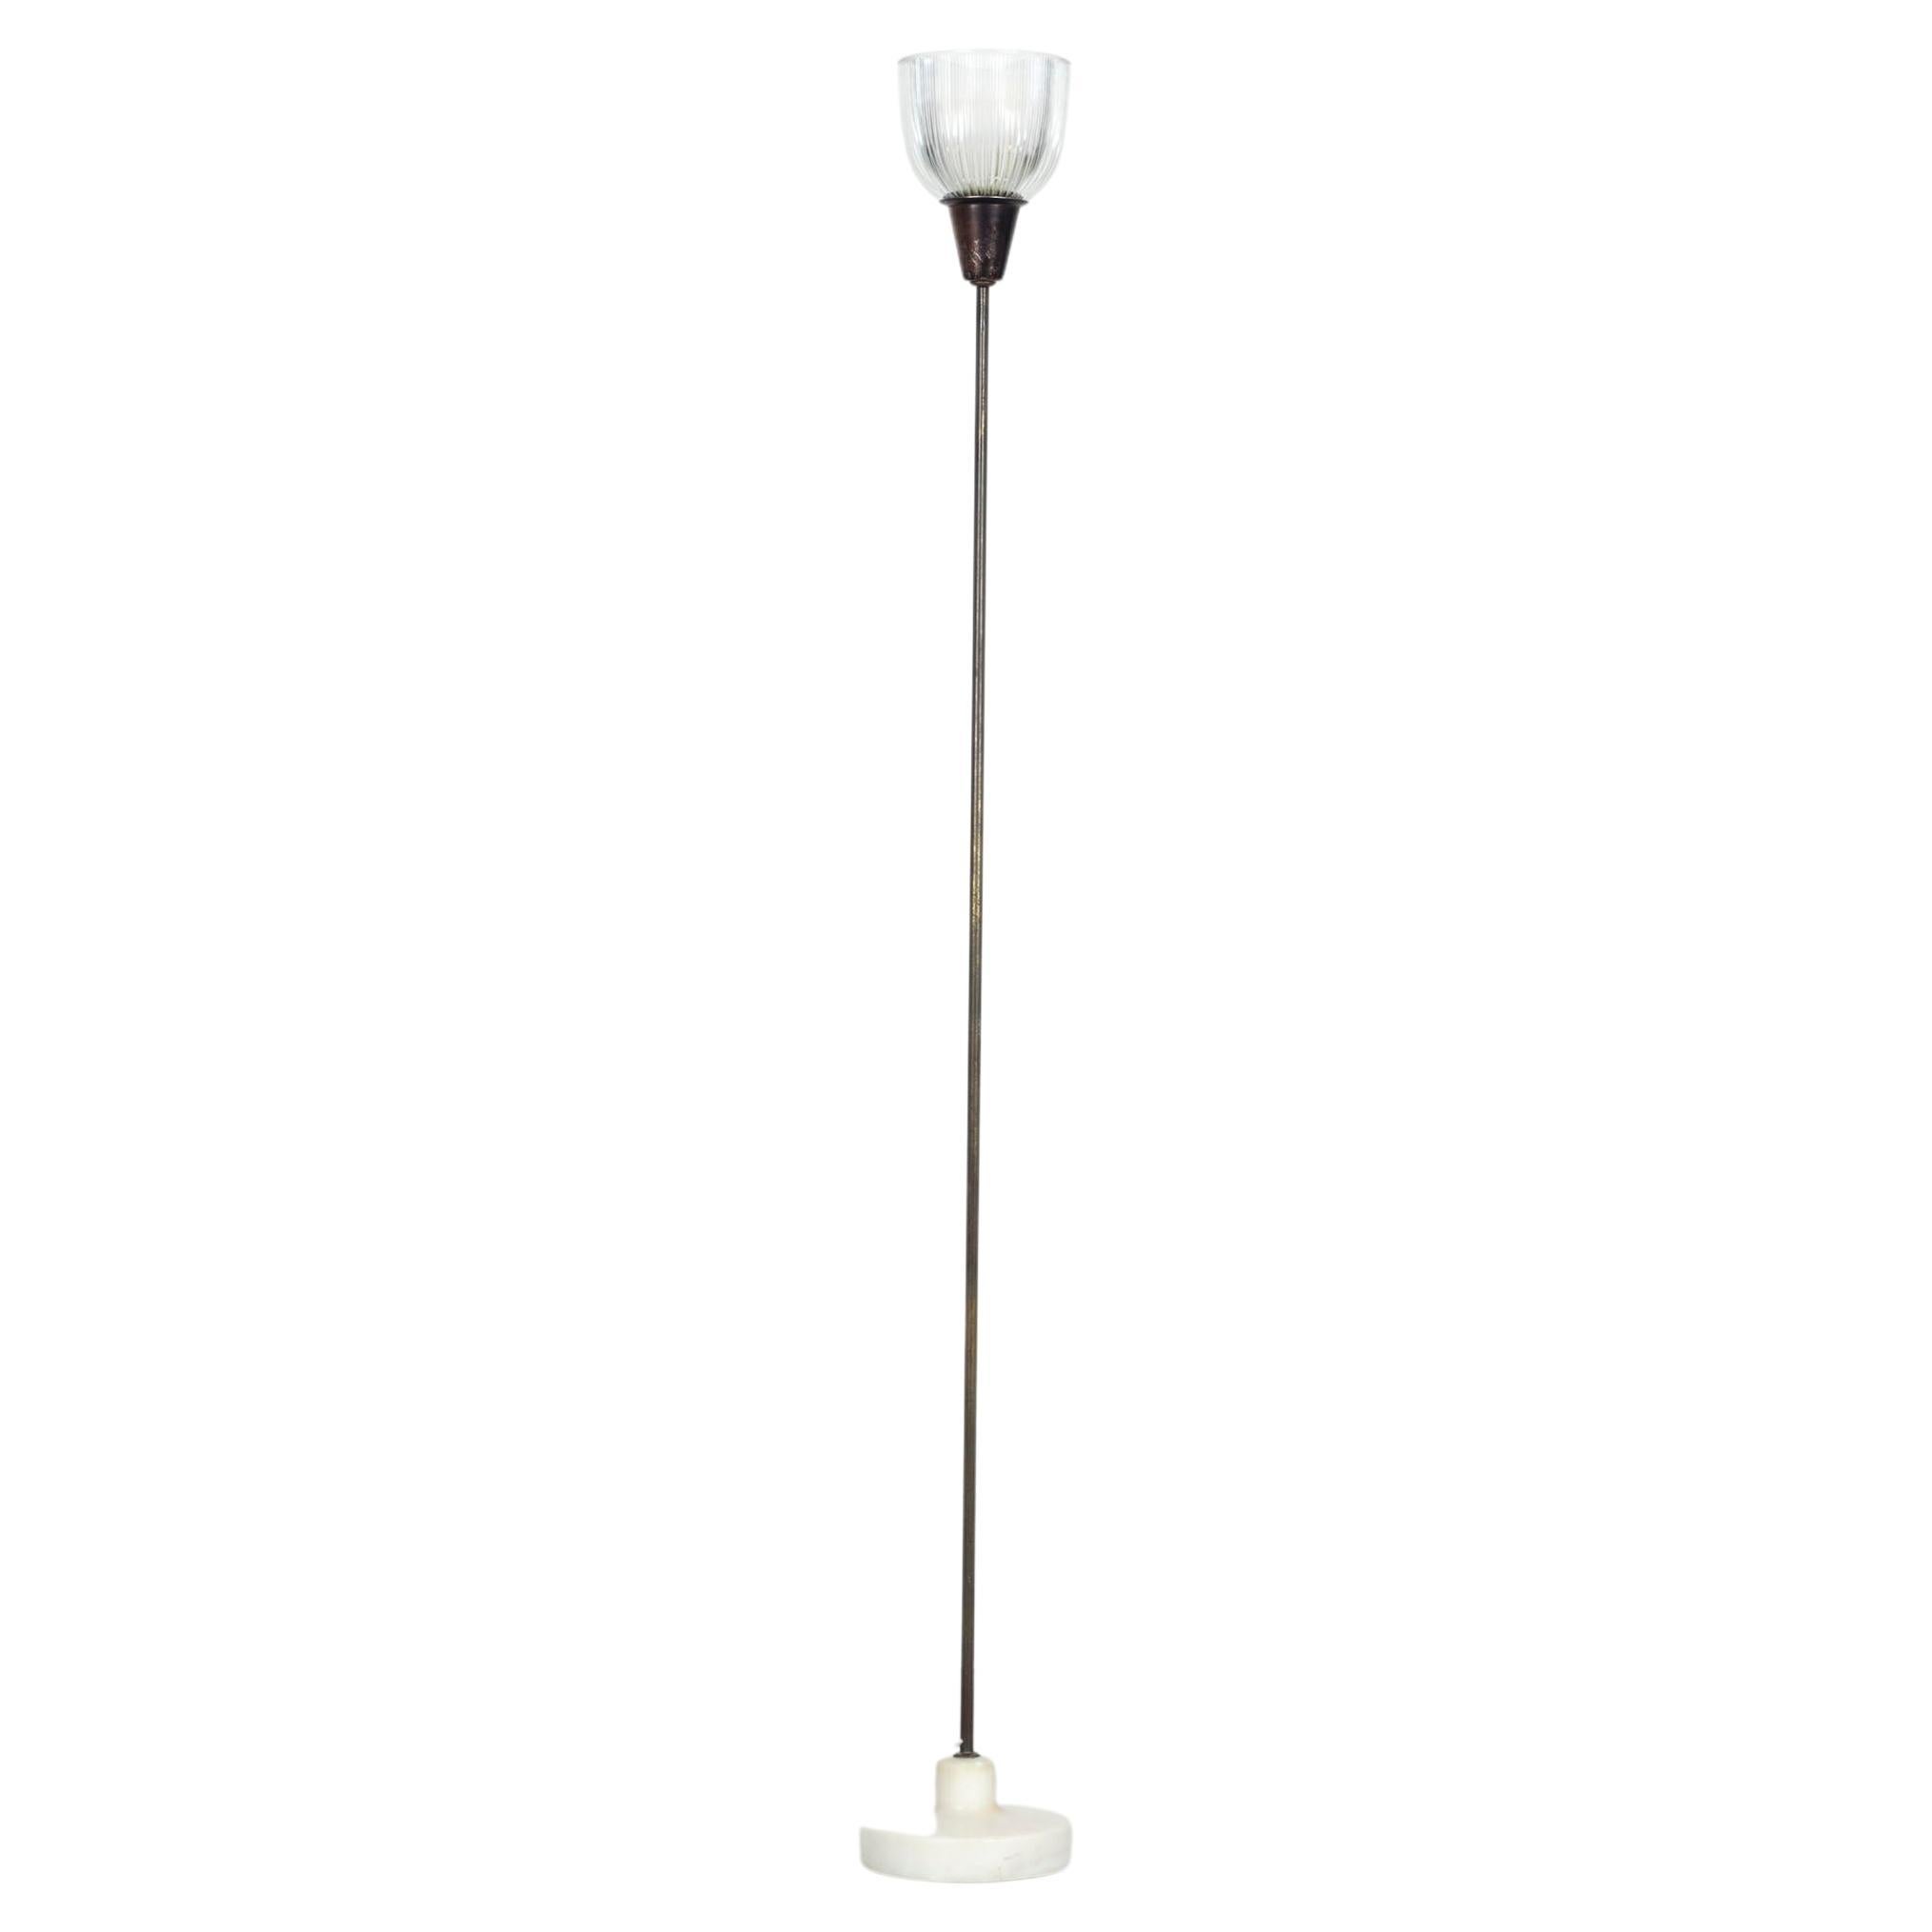 Azucena Floor Lamp from 1954 Designed by Ignazio Gardella, Italy